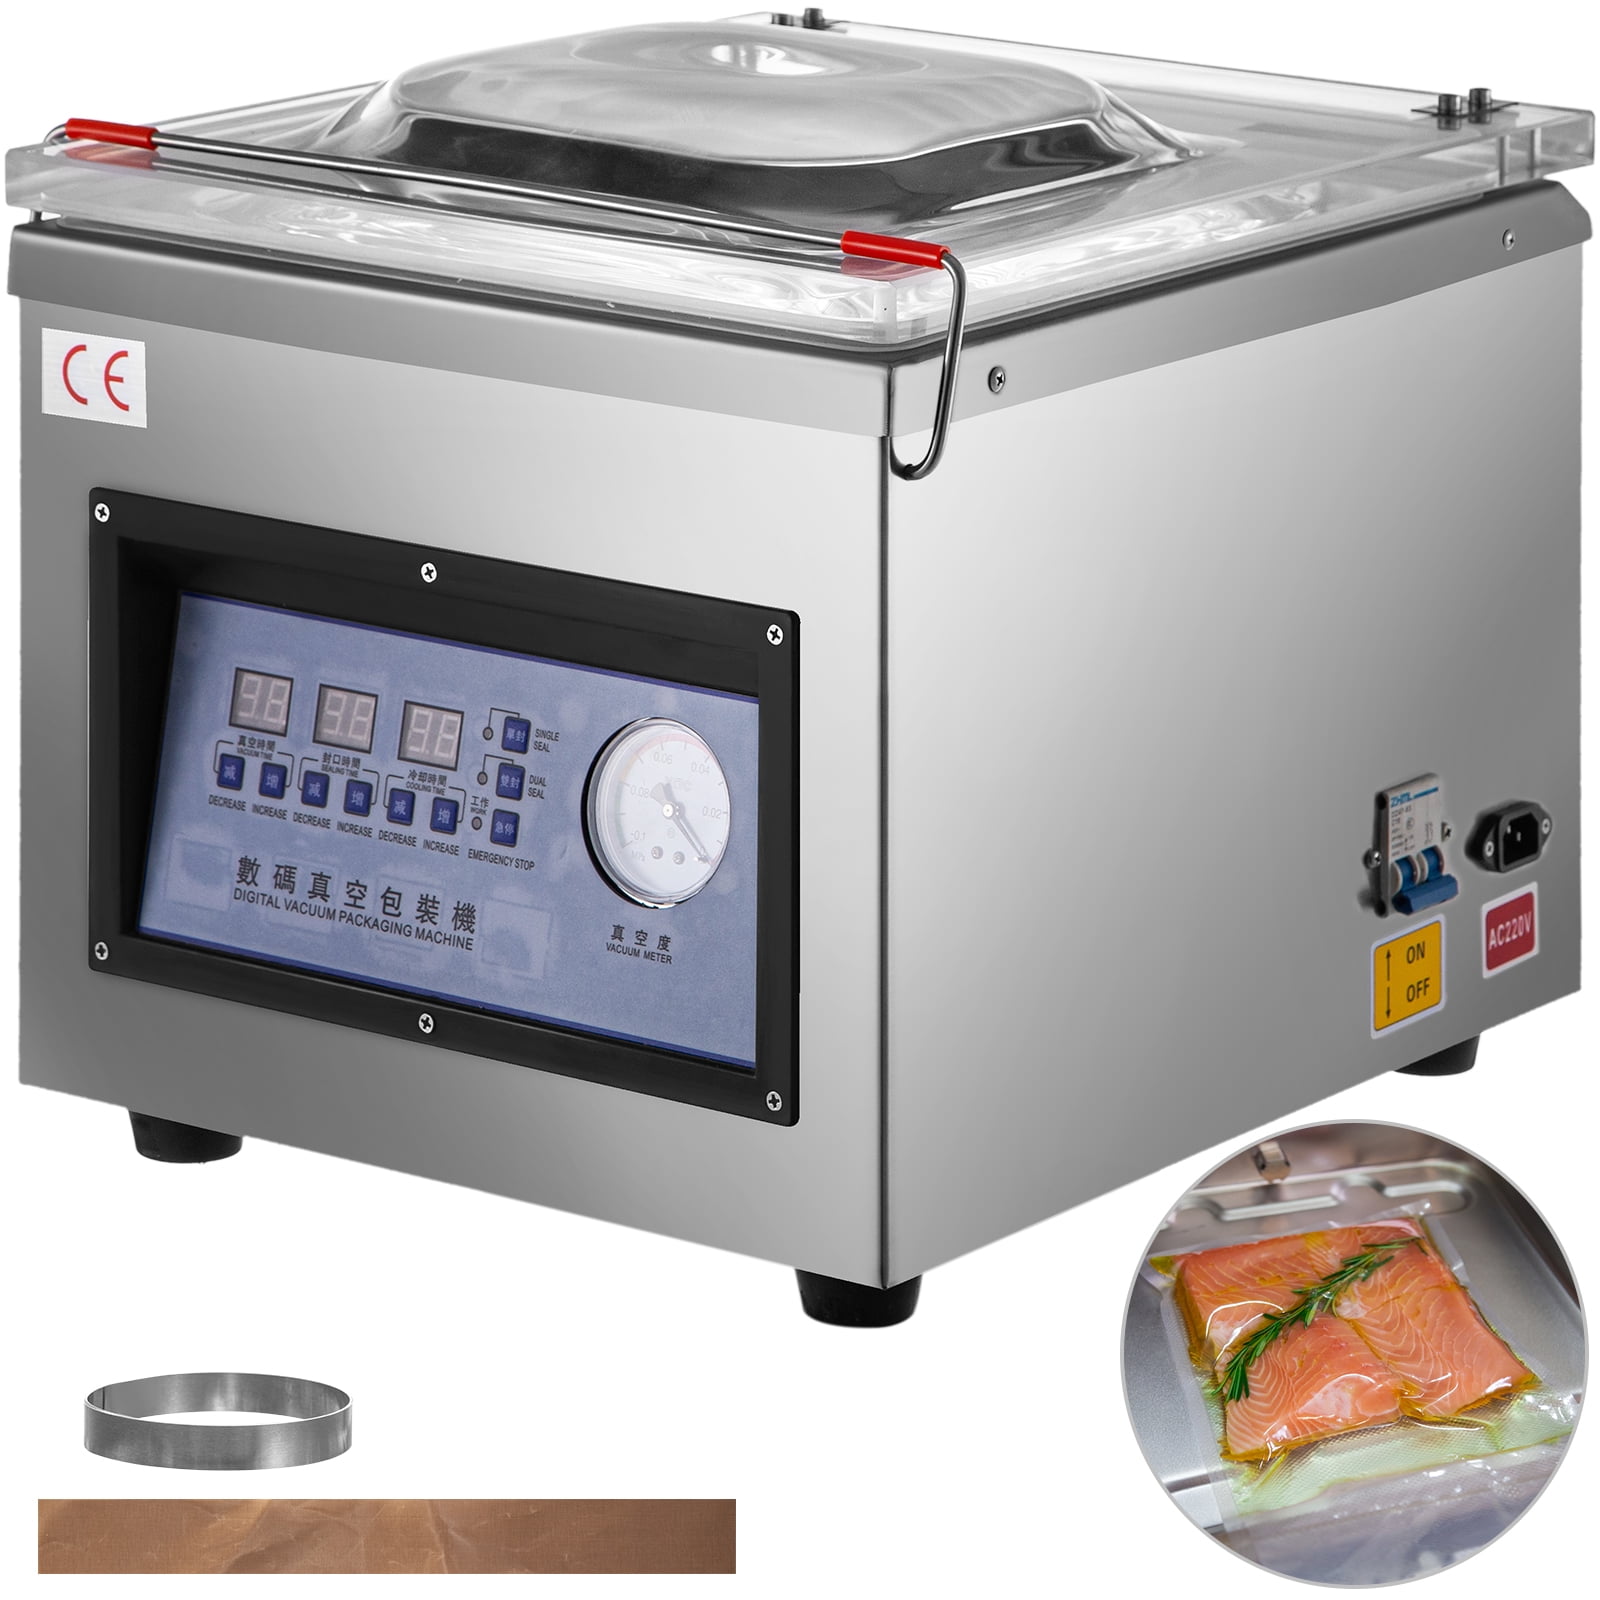 BestEquip Chamber Vacuum Sealer Machine DZ 260S Commercial Kitchen Food Chamber Vacuum Sealer, 110V Packaging Machine Sealer for Food Saver, Home, Com